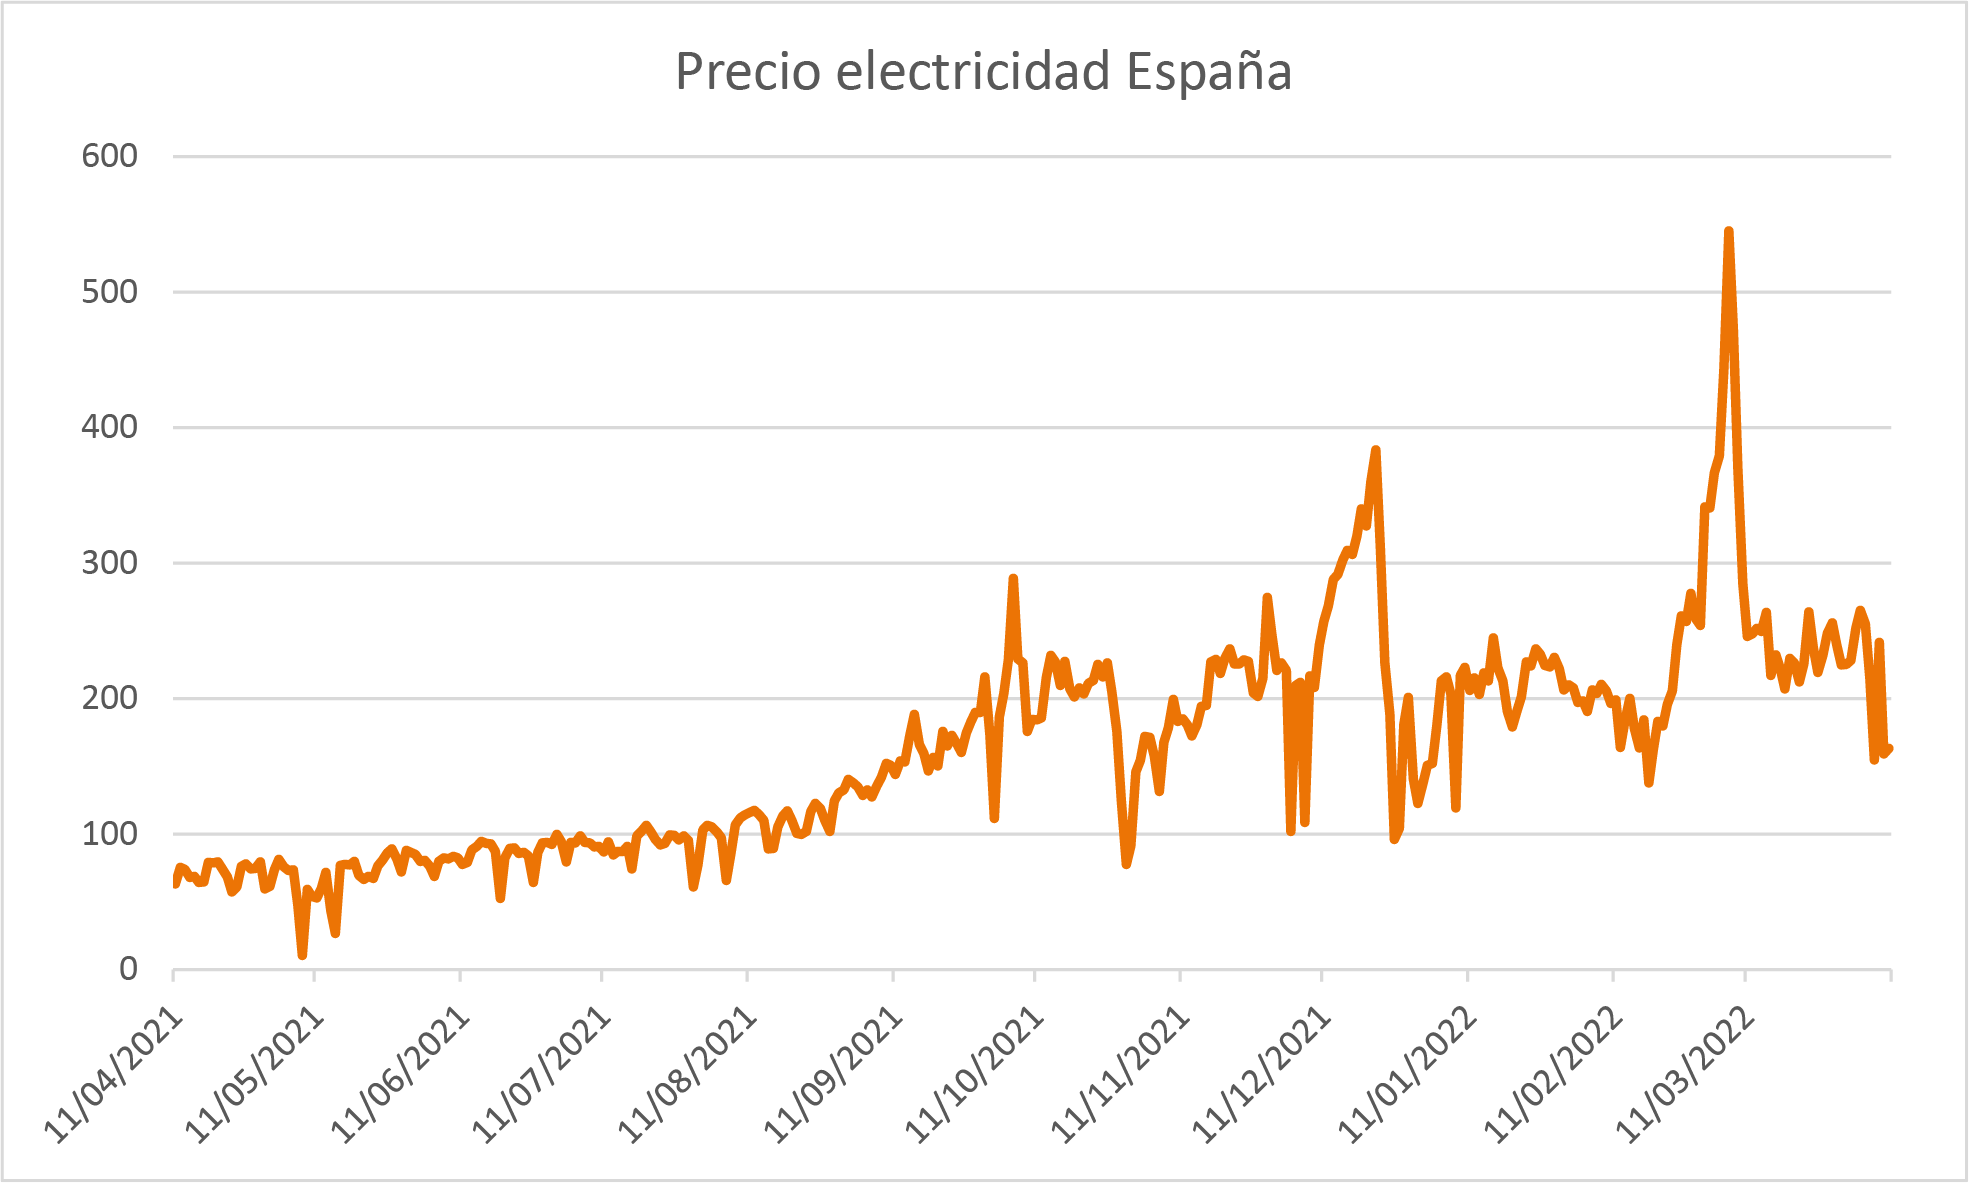 https://campaign-image.eu/zohocampaigns/precio_electricidad_espa%C3%B1a_zc_v4_71196000002525189.png